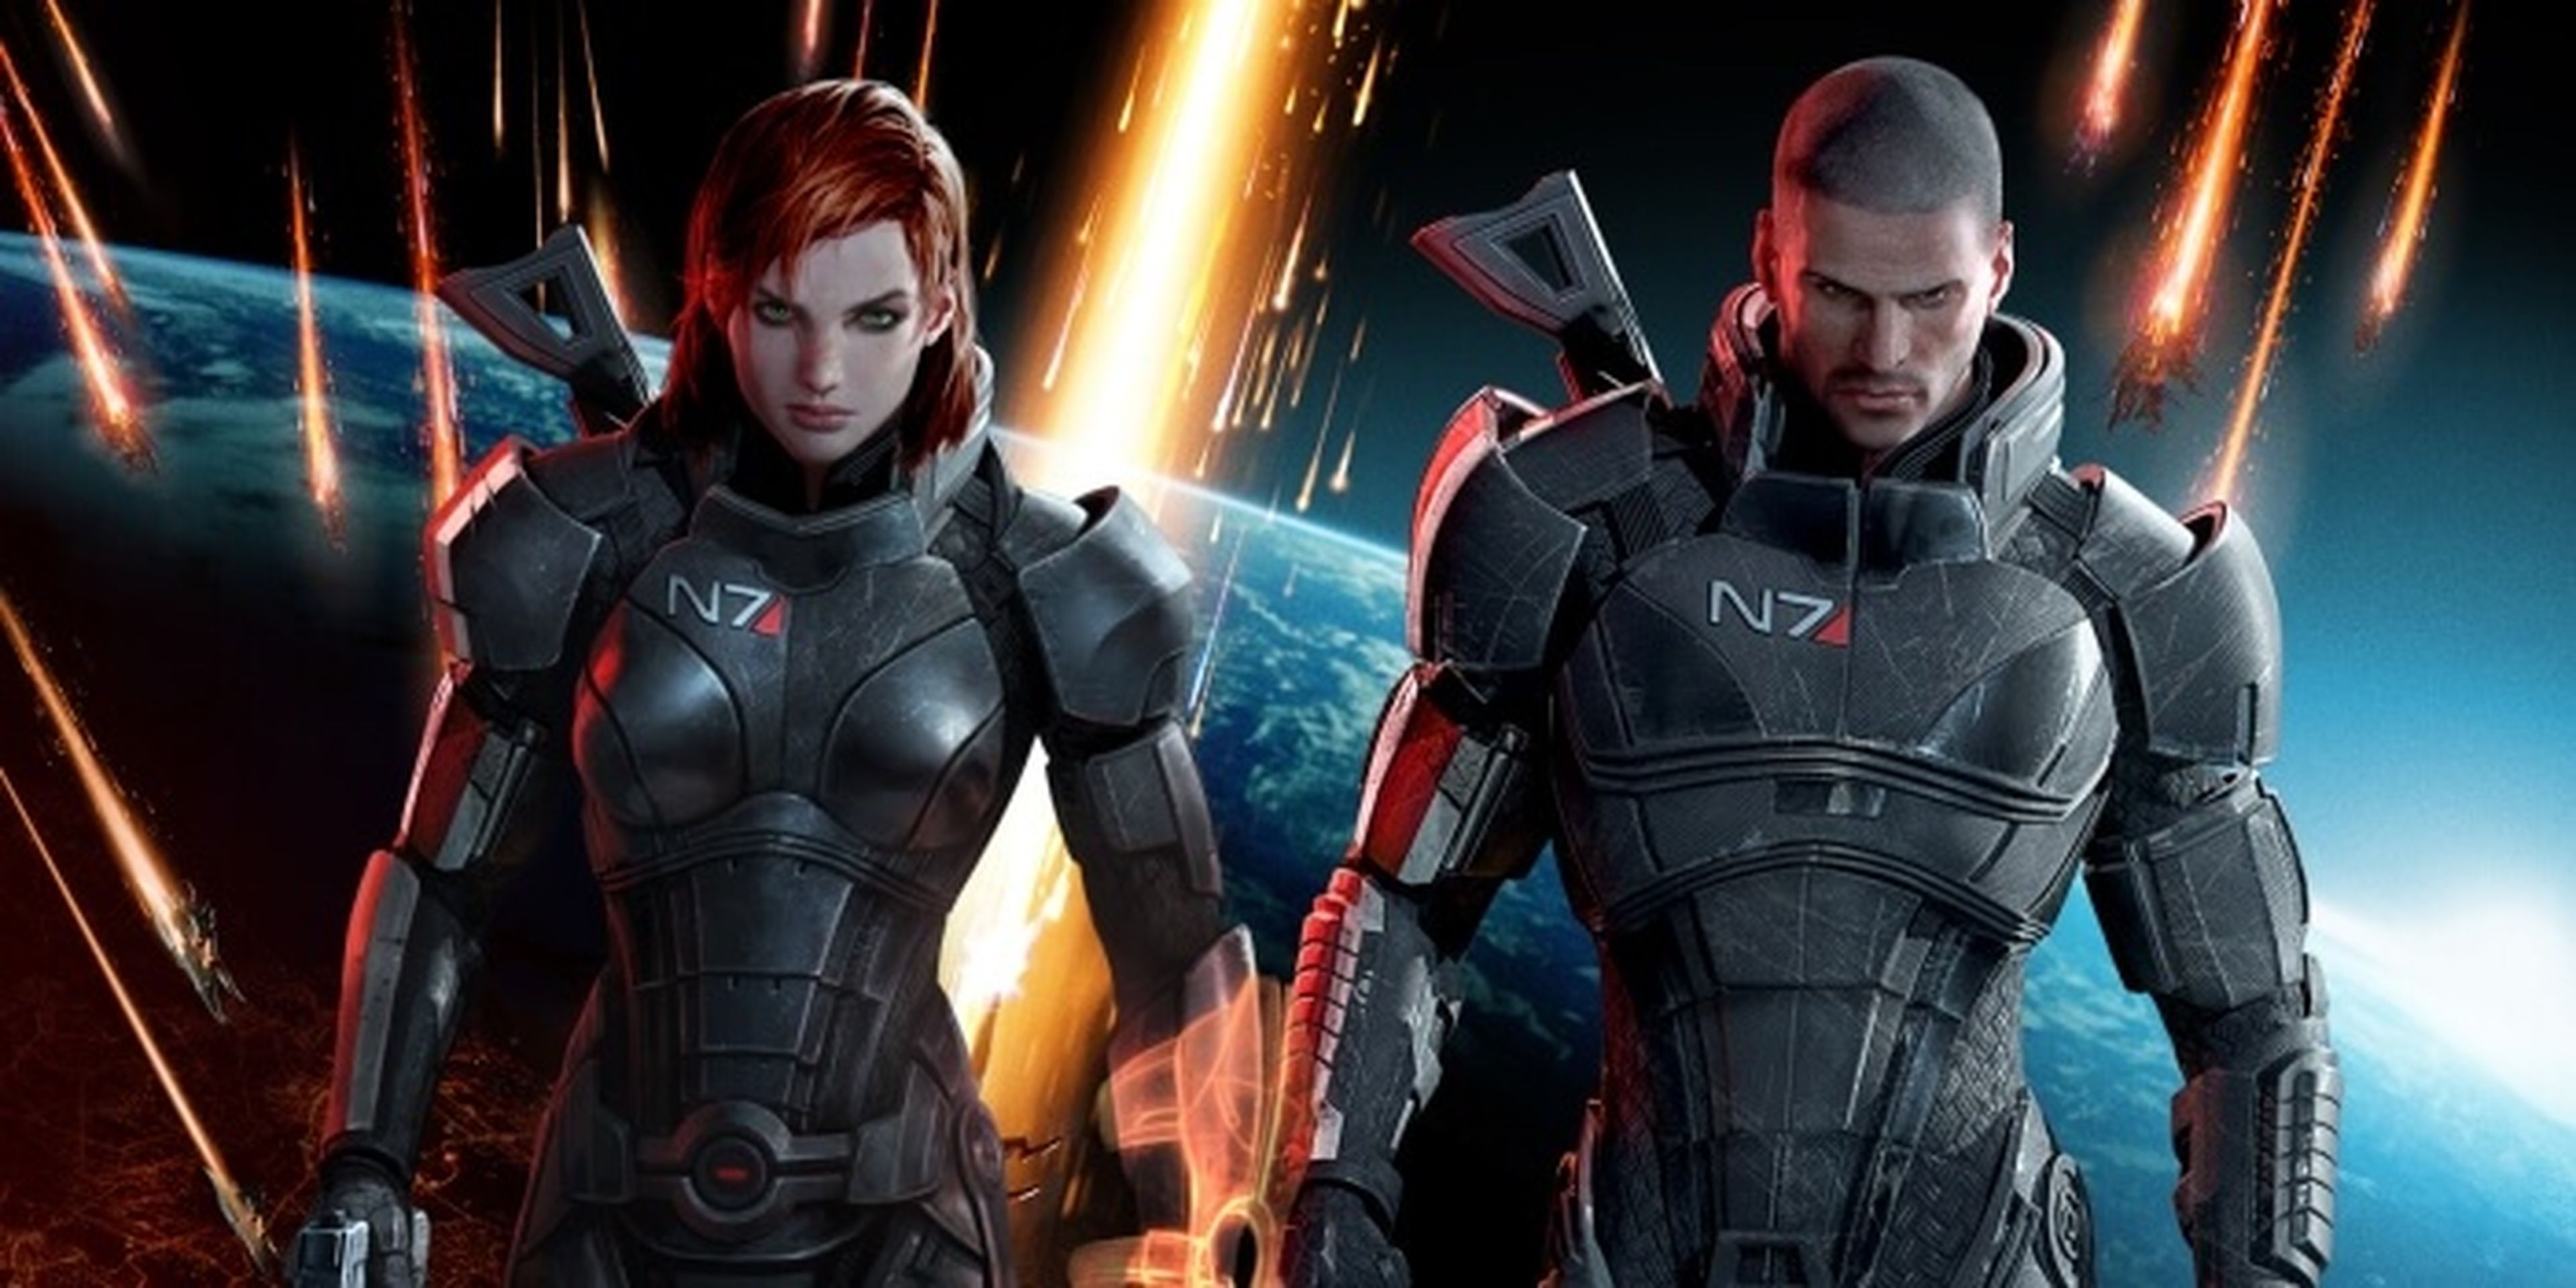 Shepard en Mass Effect 3